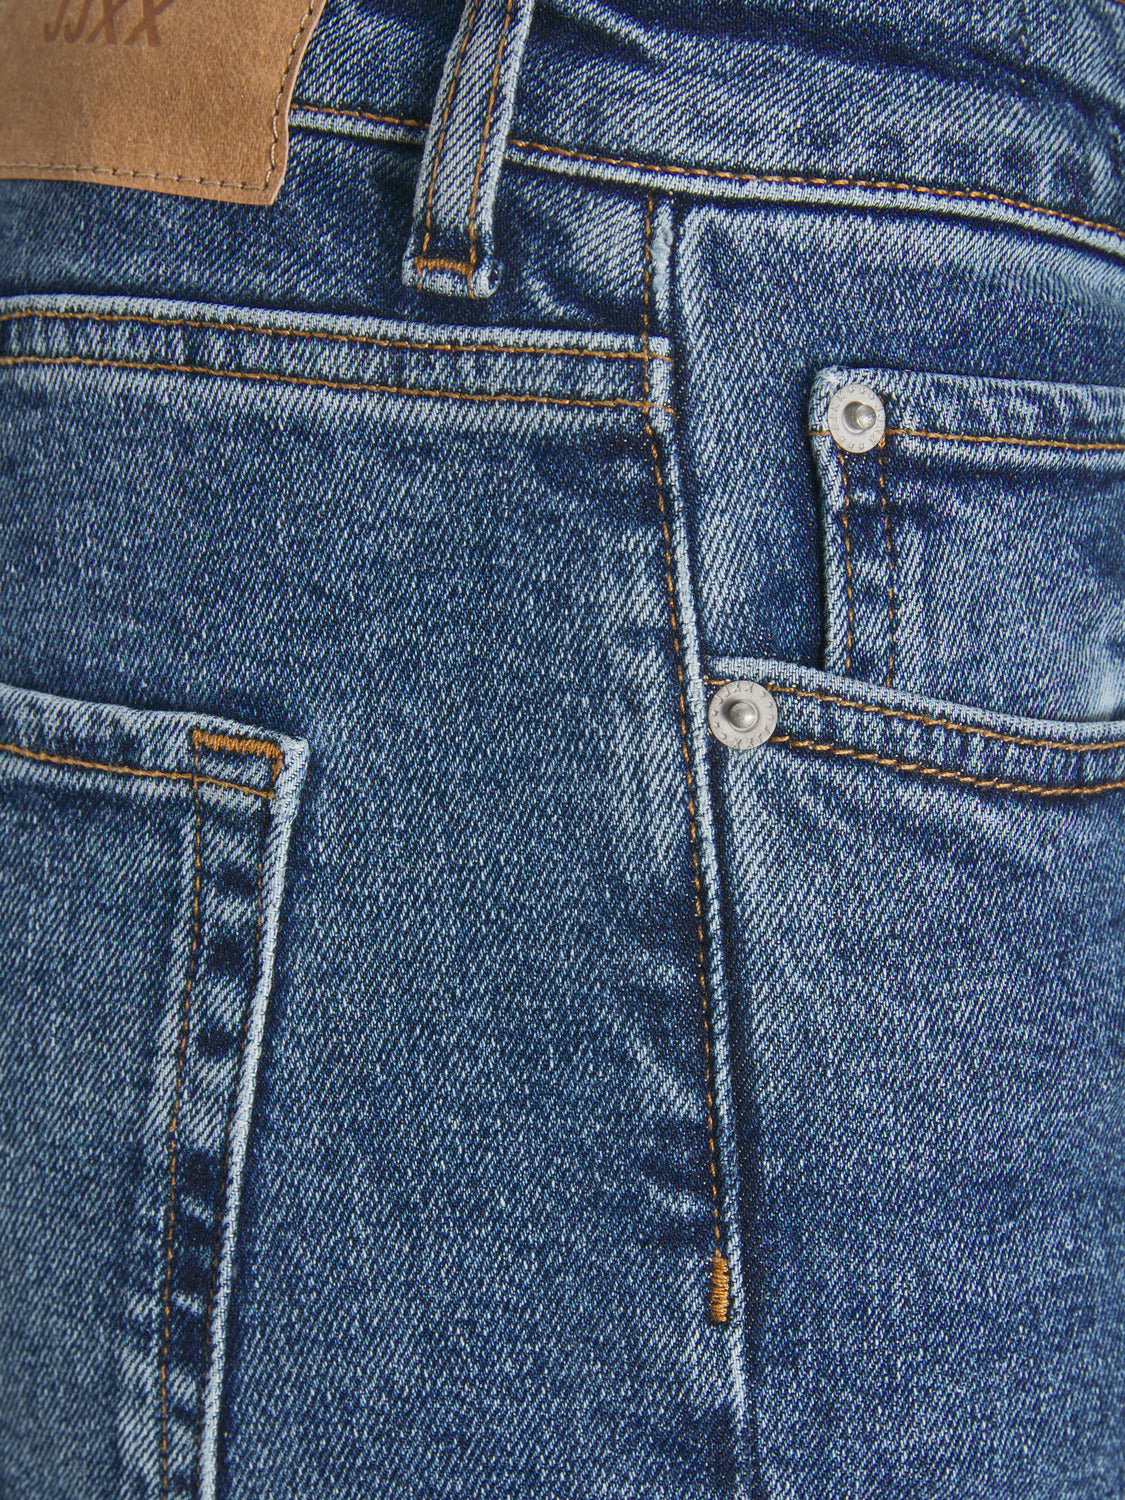 JXSEVILLE Jeans - Medium Blue Denim